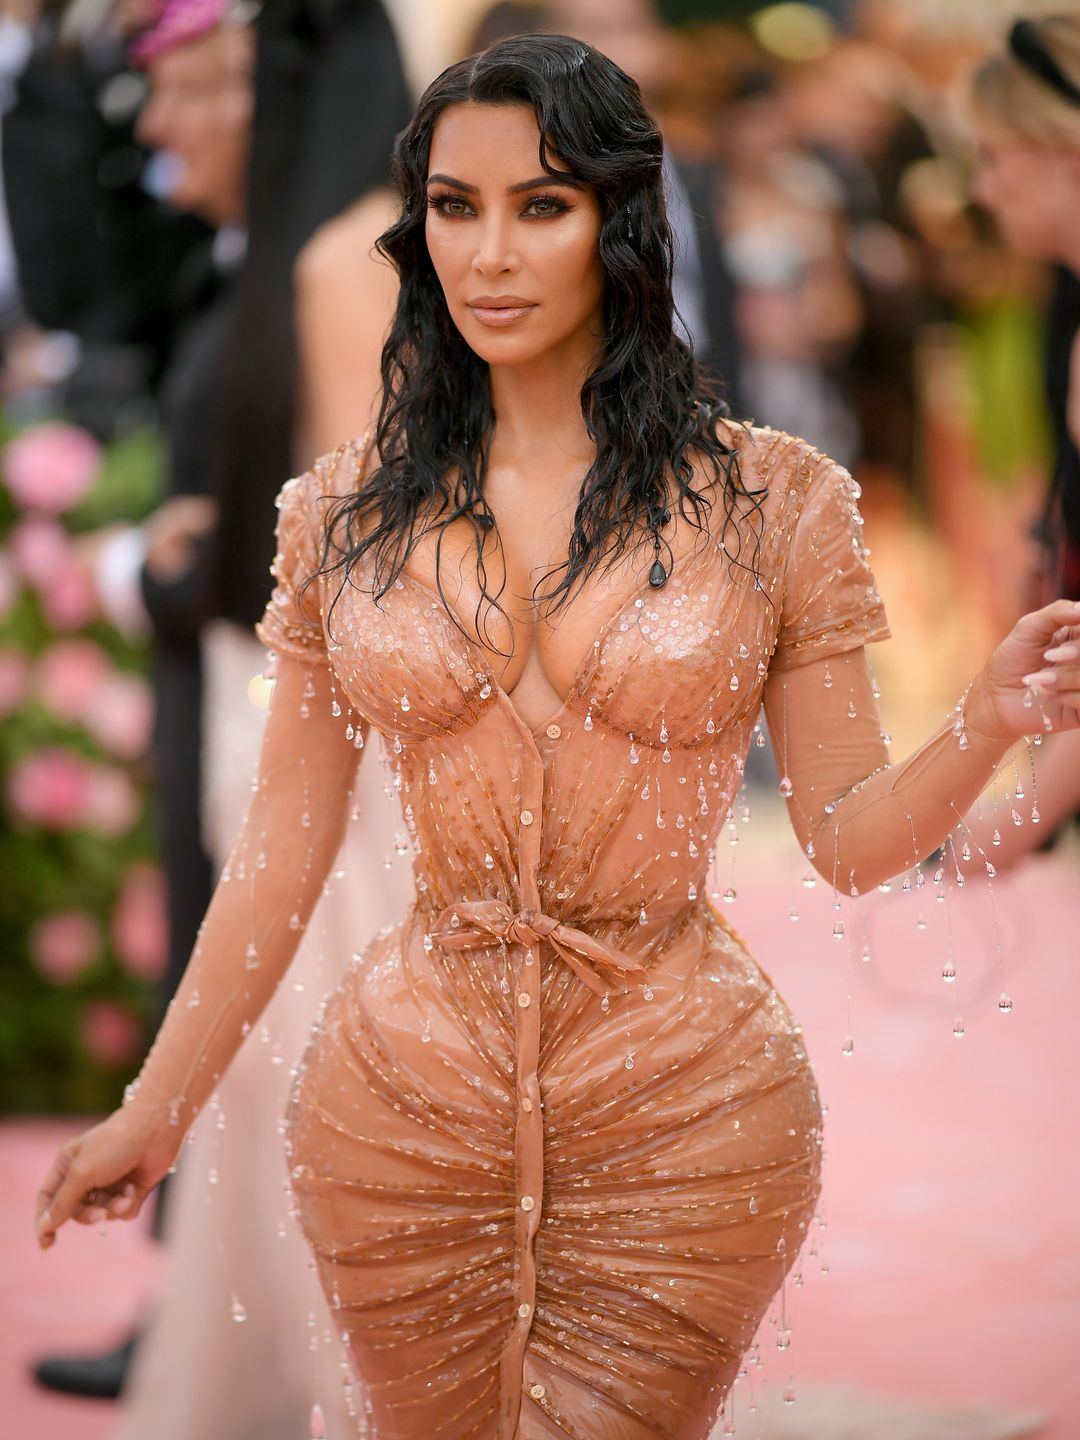 Kim Kardashian West attends The 2019 Met Gala Celebrating Camp: Notes on Fashion at Metropolitan Museum of Art on May 06, 2019